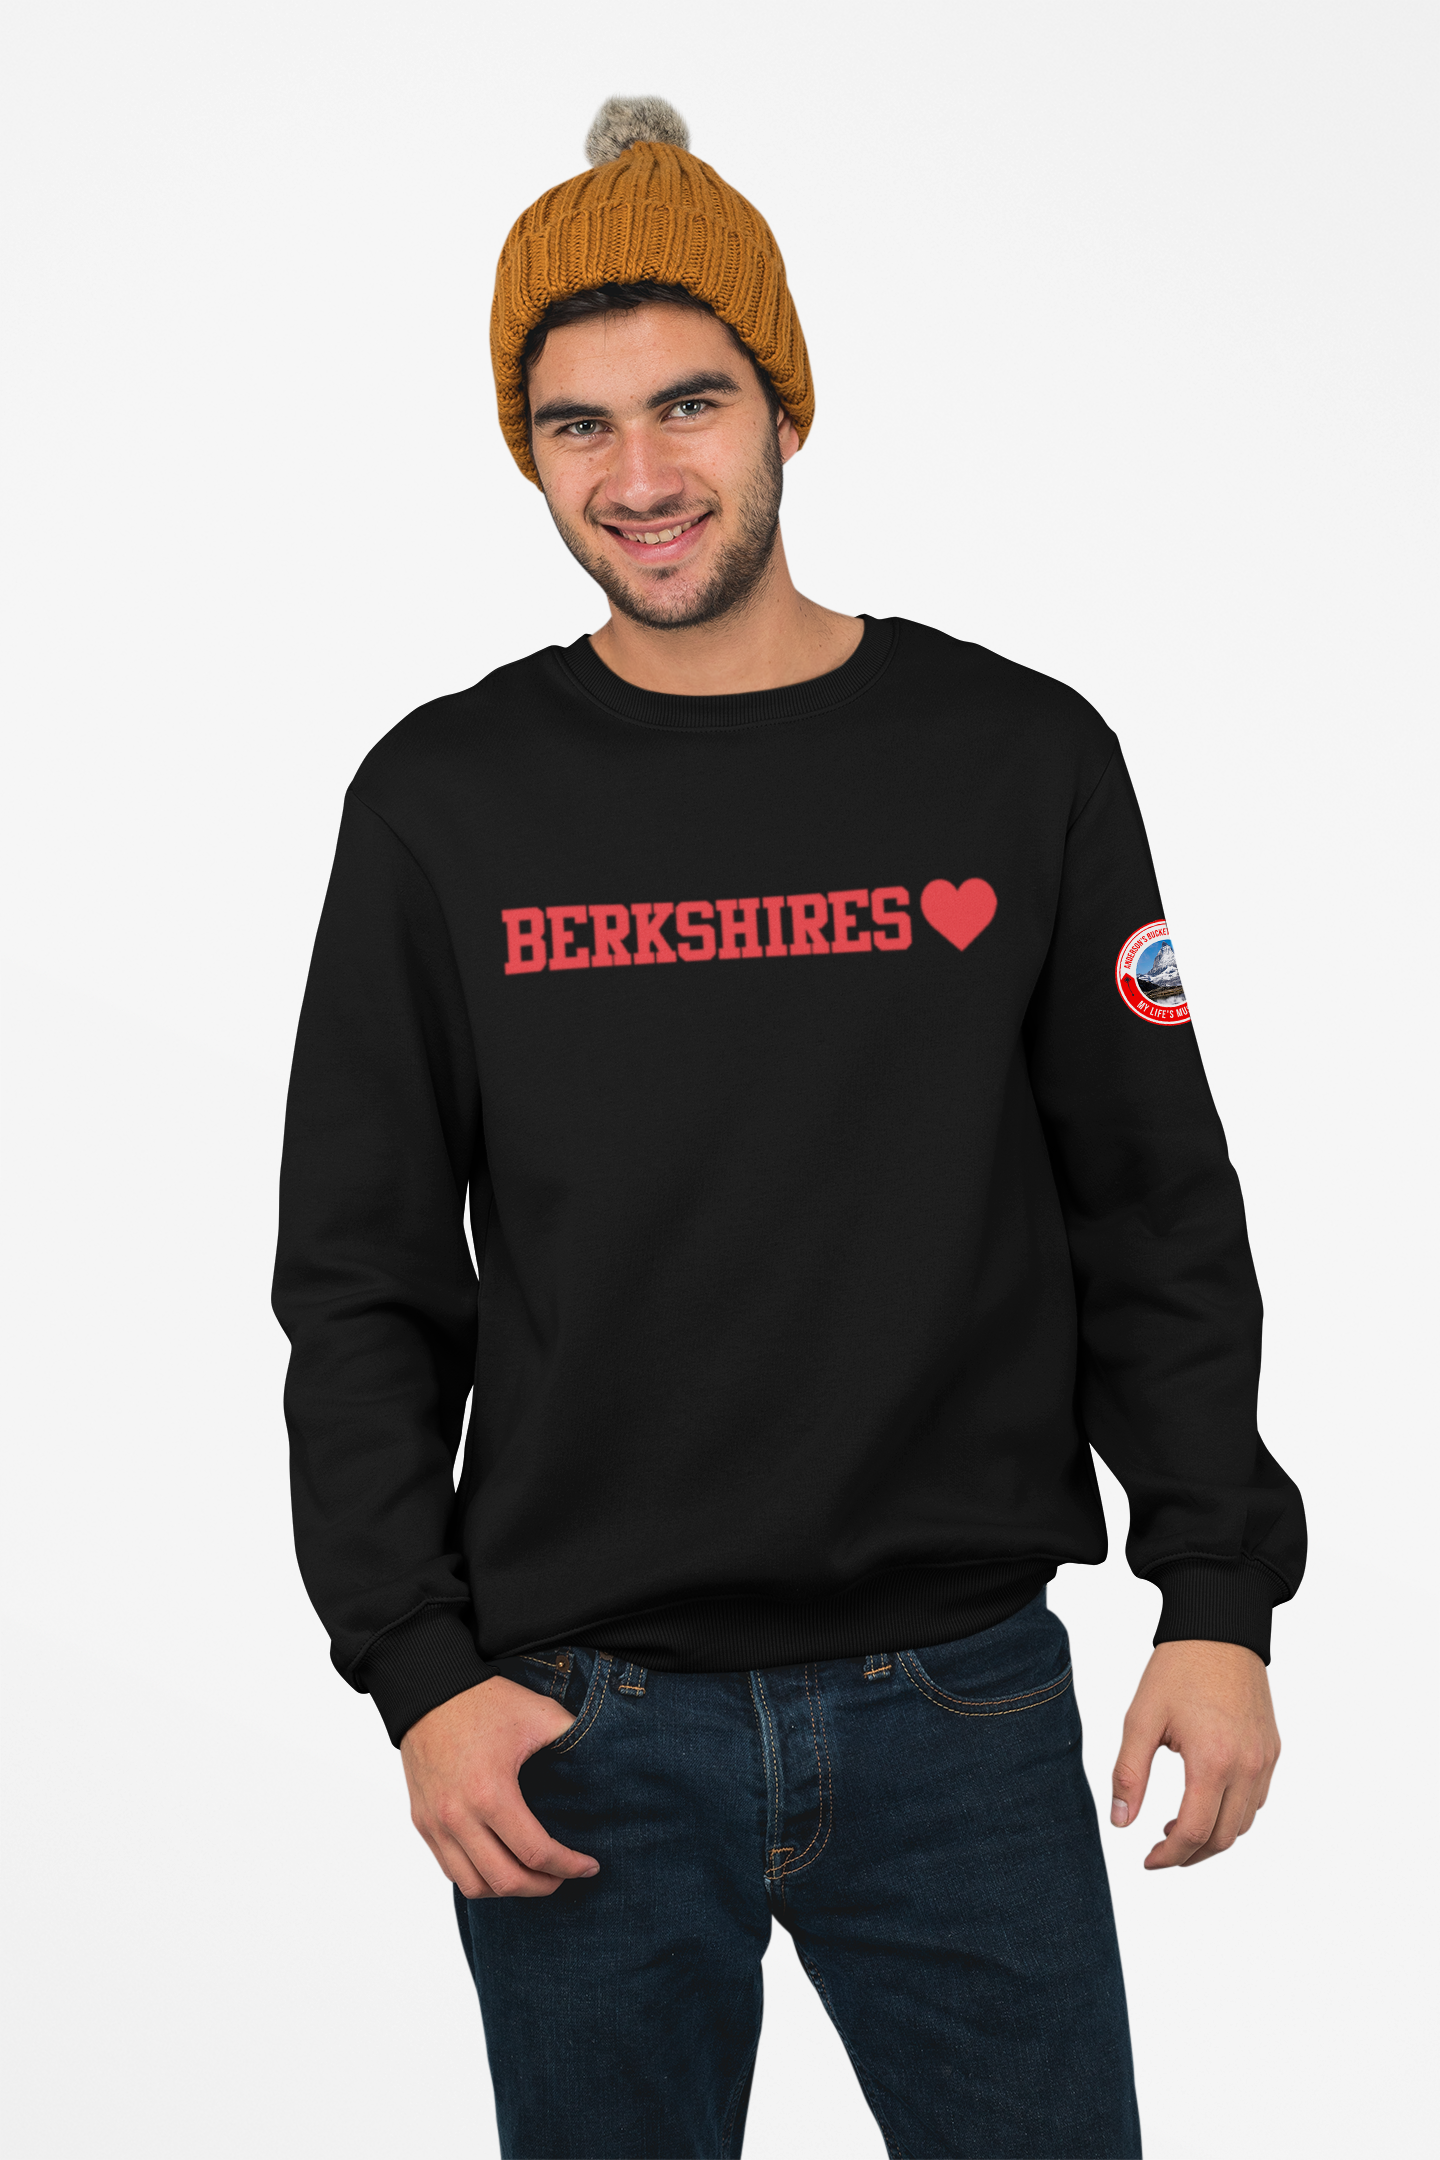 Berkshires - Crewneck Black